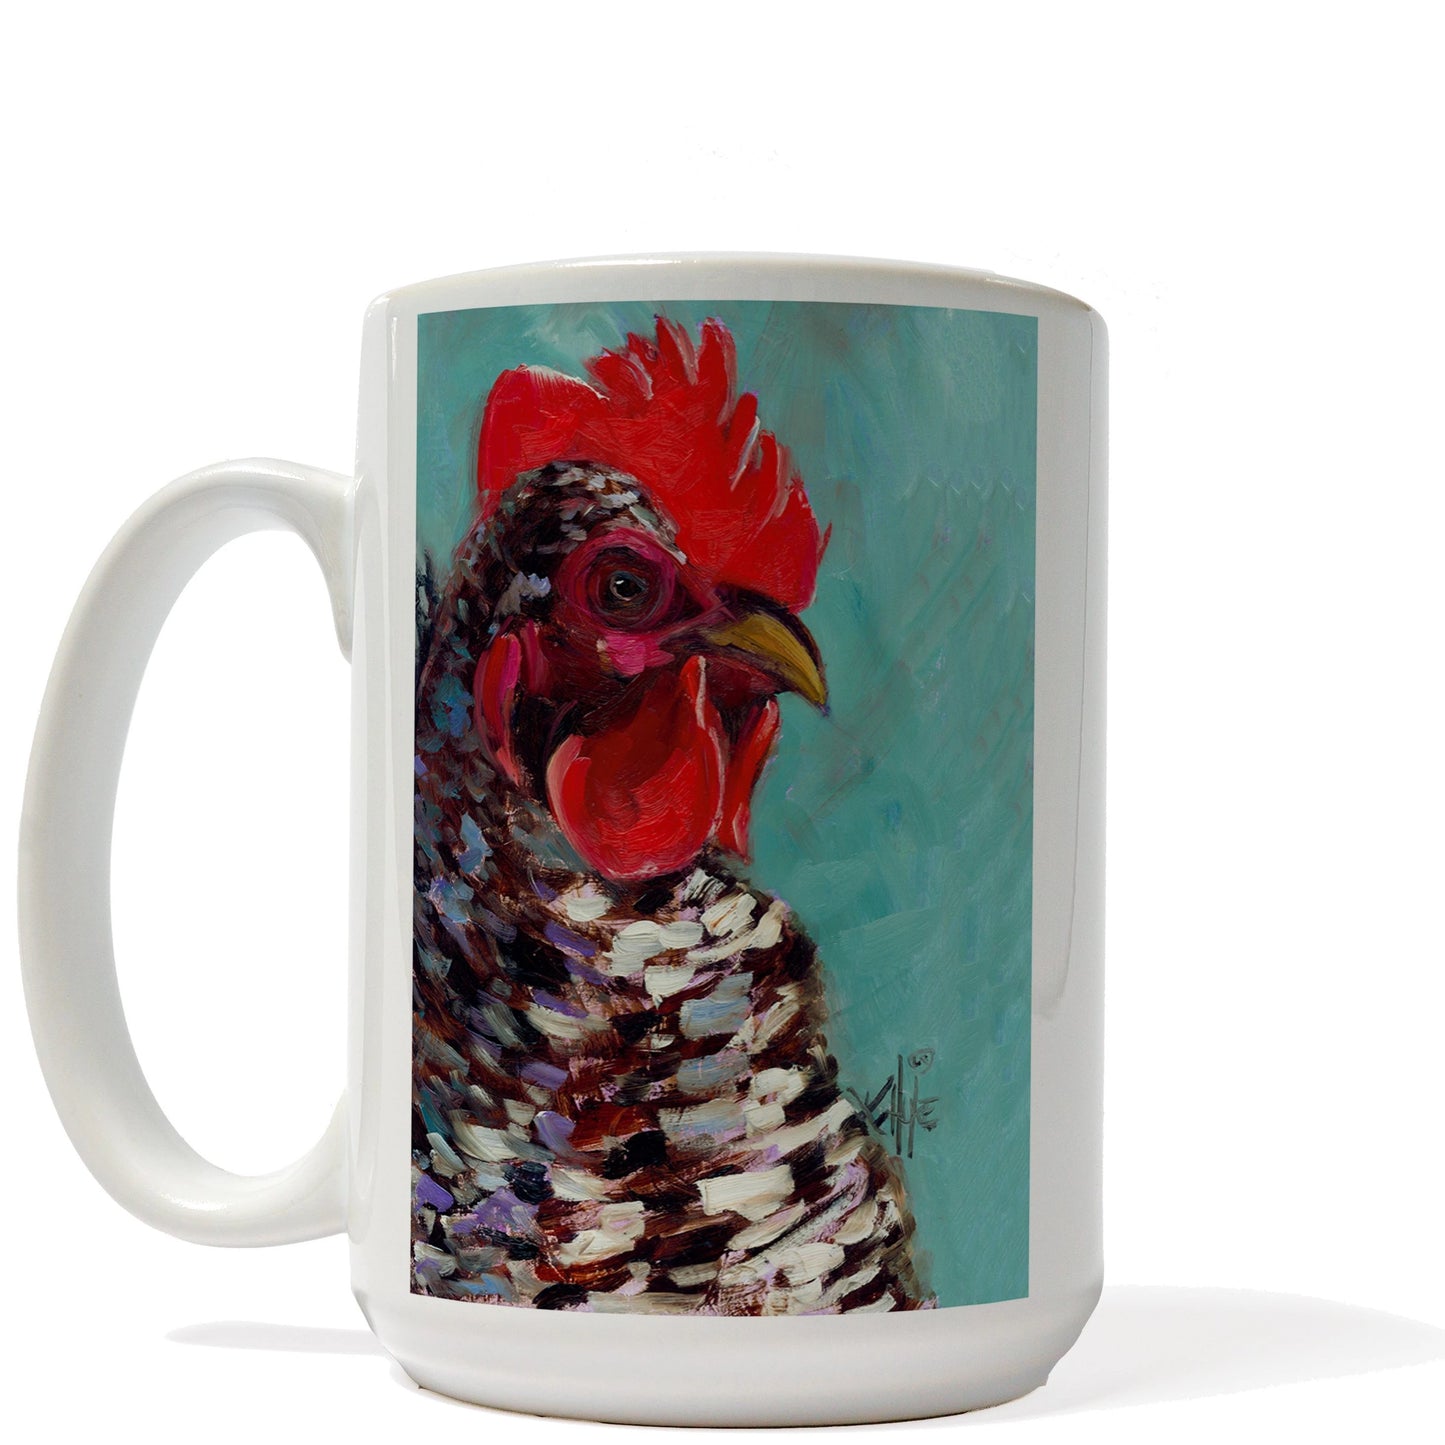 Rooster Mug By K. Huke